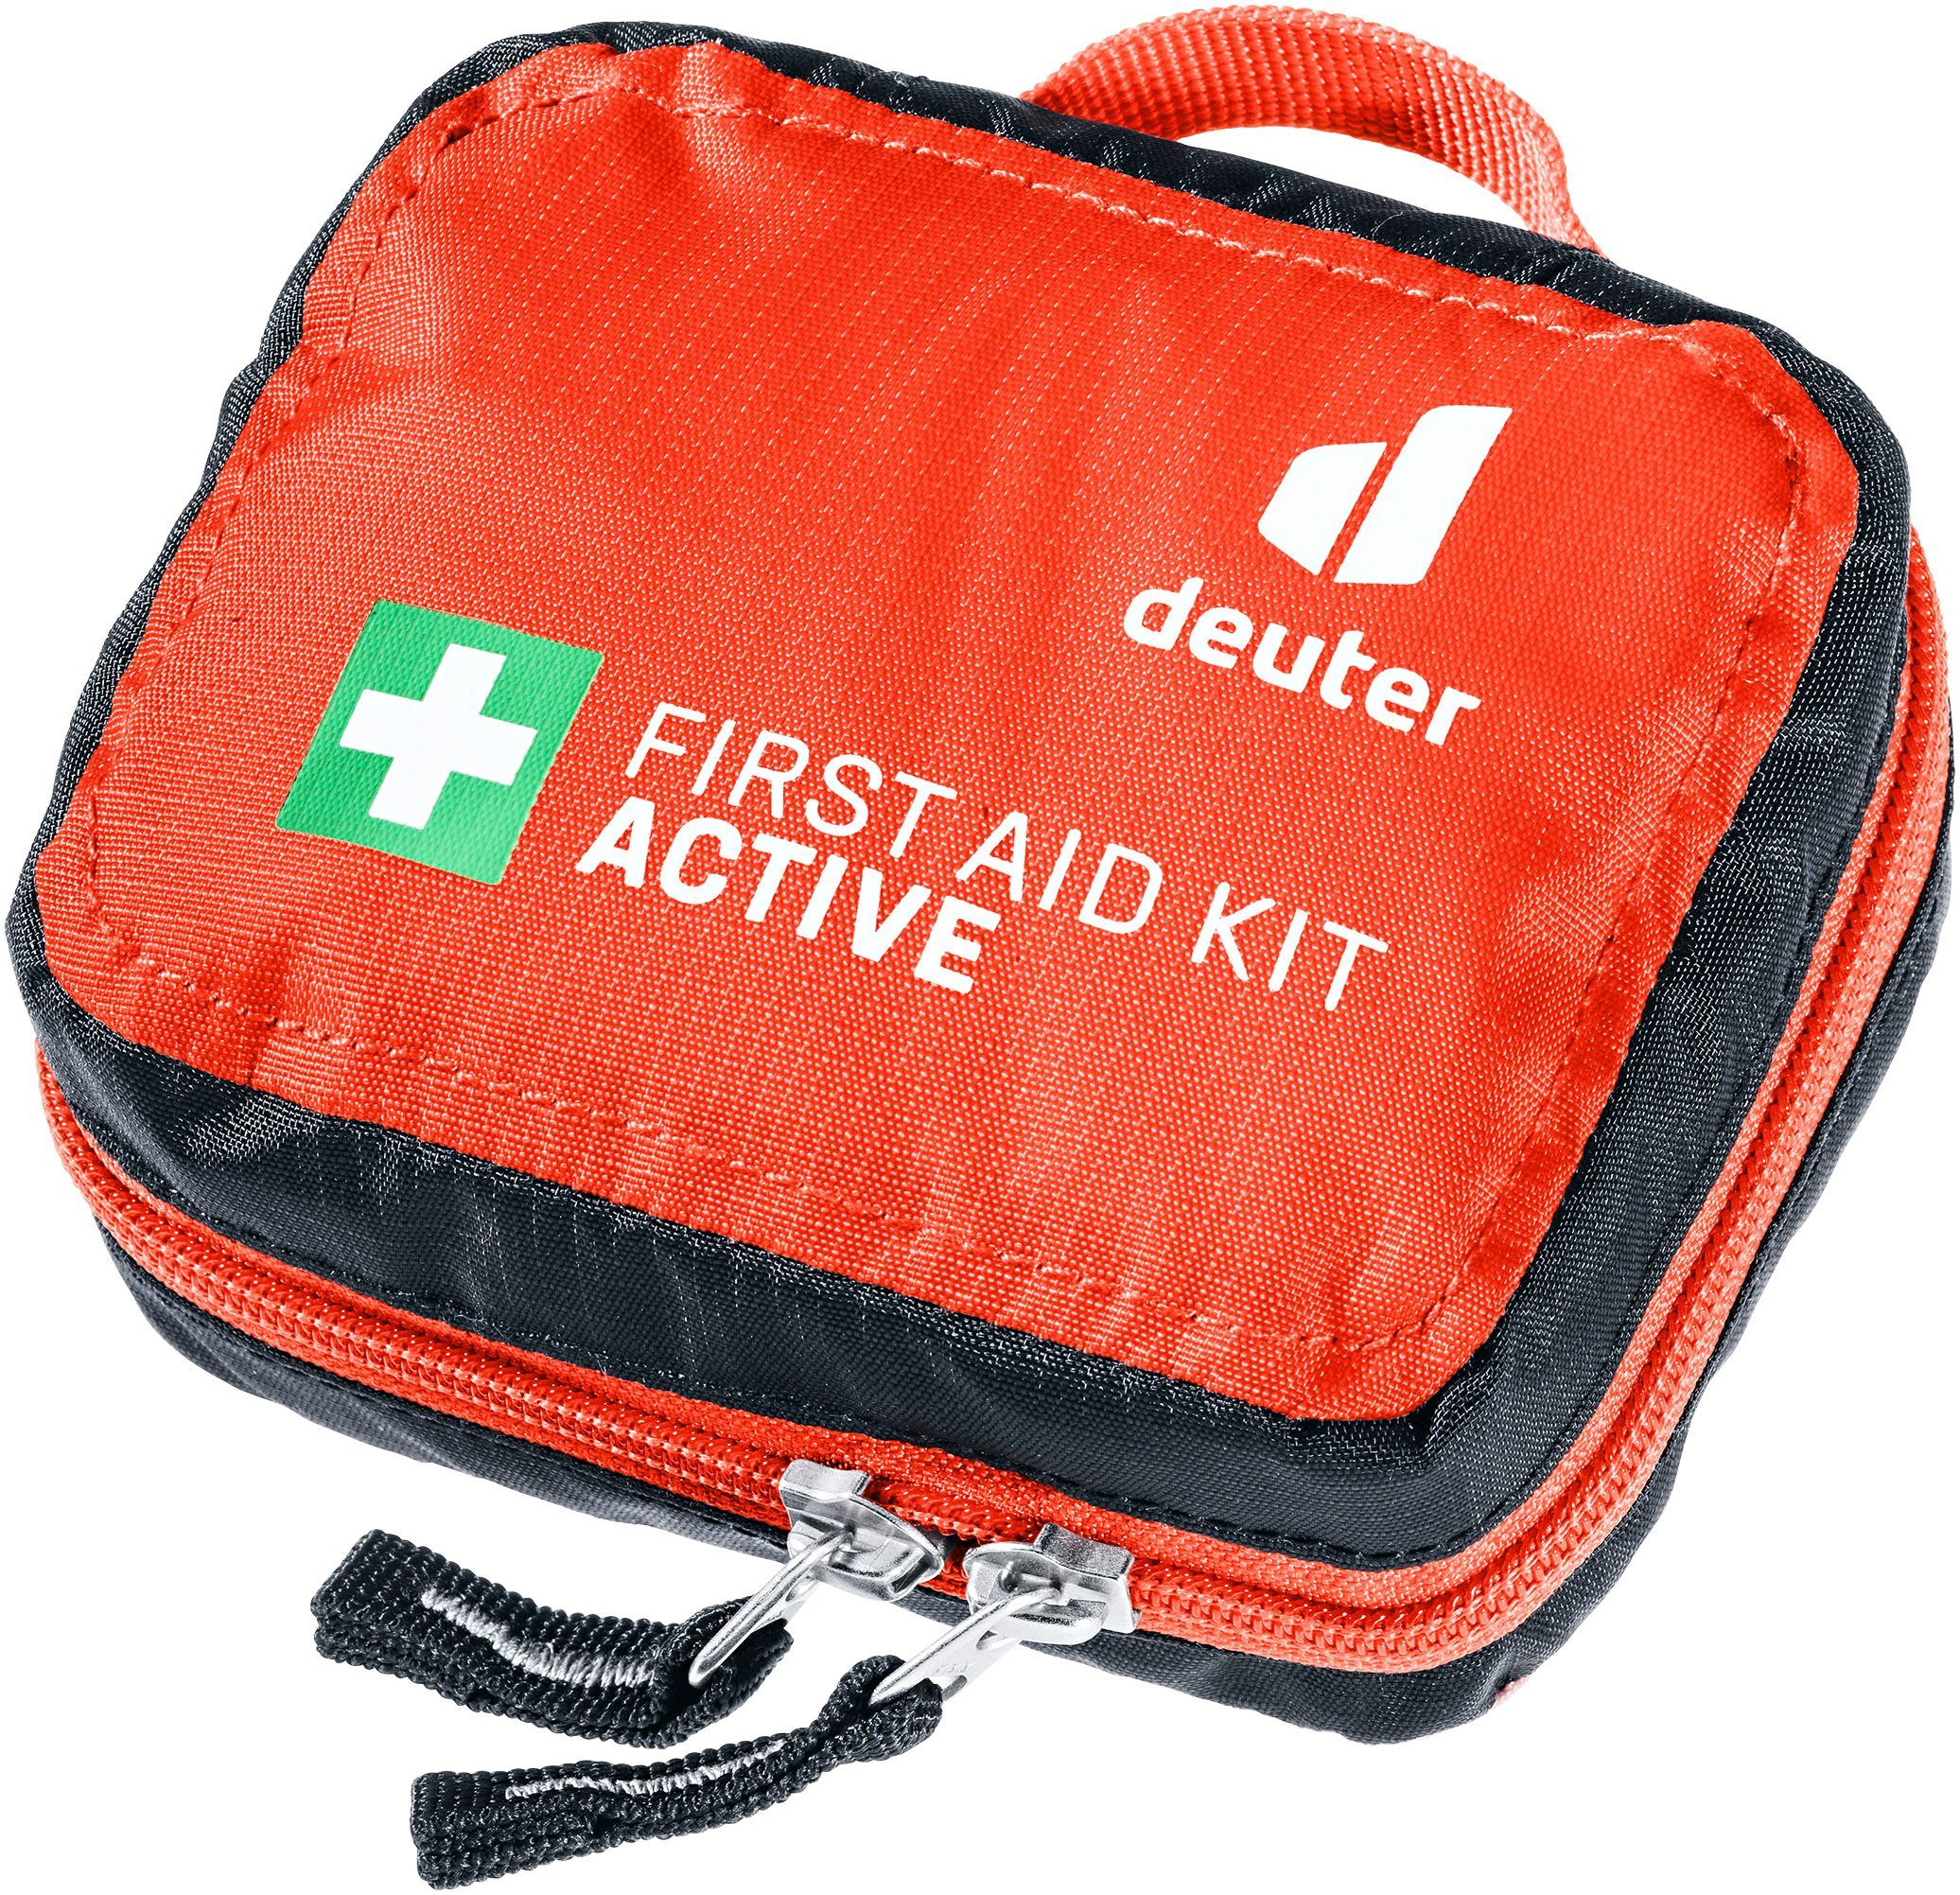 https://i.otto.de/i/otto/51bf8b9a-92f1-5782-842f-9179ed3145ad/deuter-erste-hilfe-set-first-aid-kit-active.jpg?$formatz$